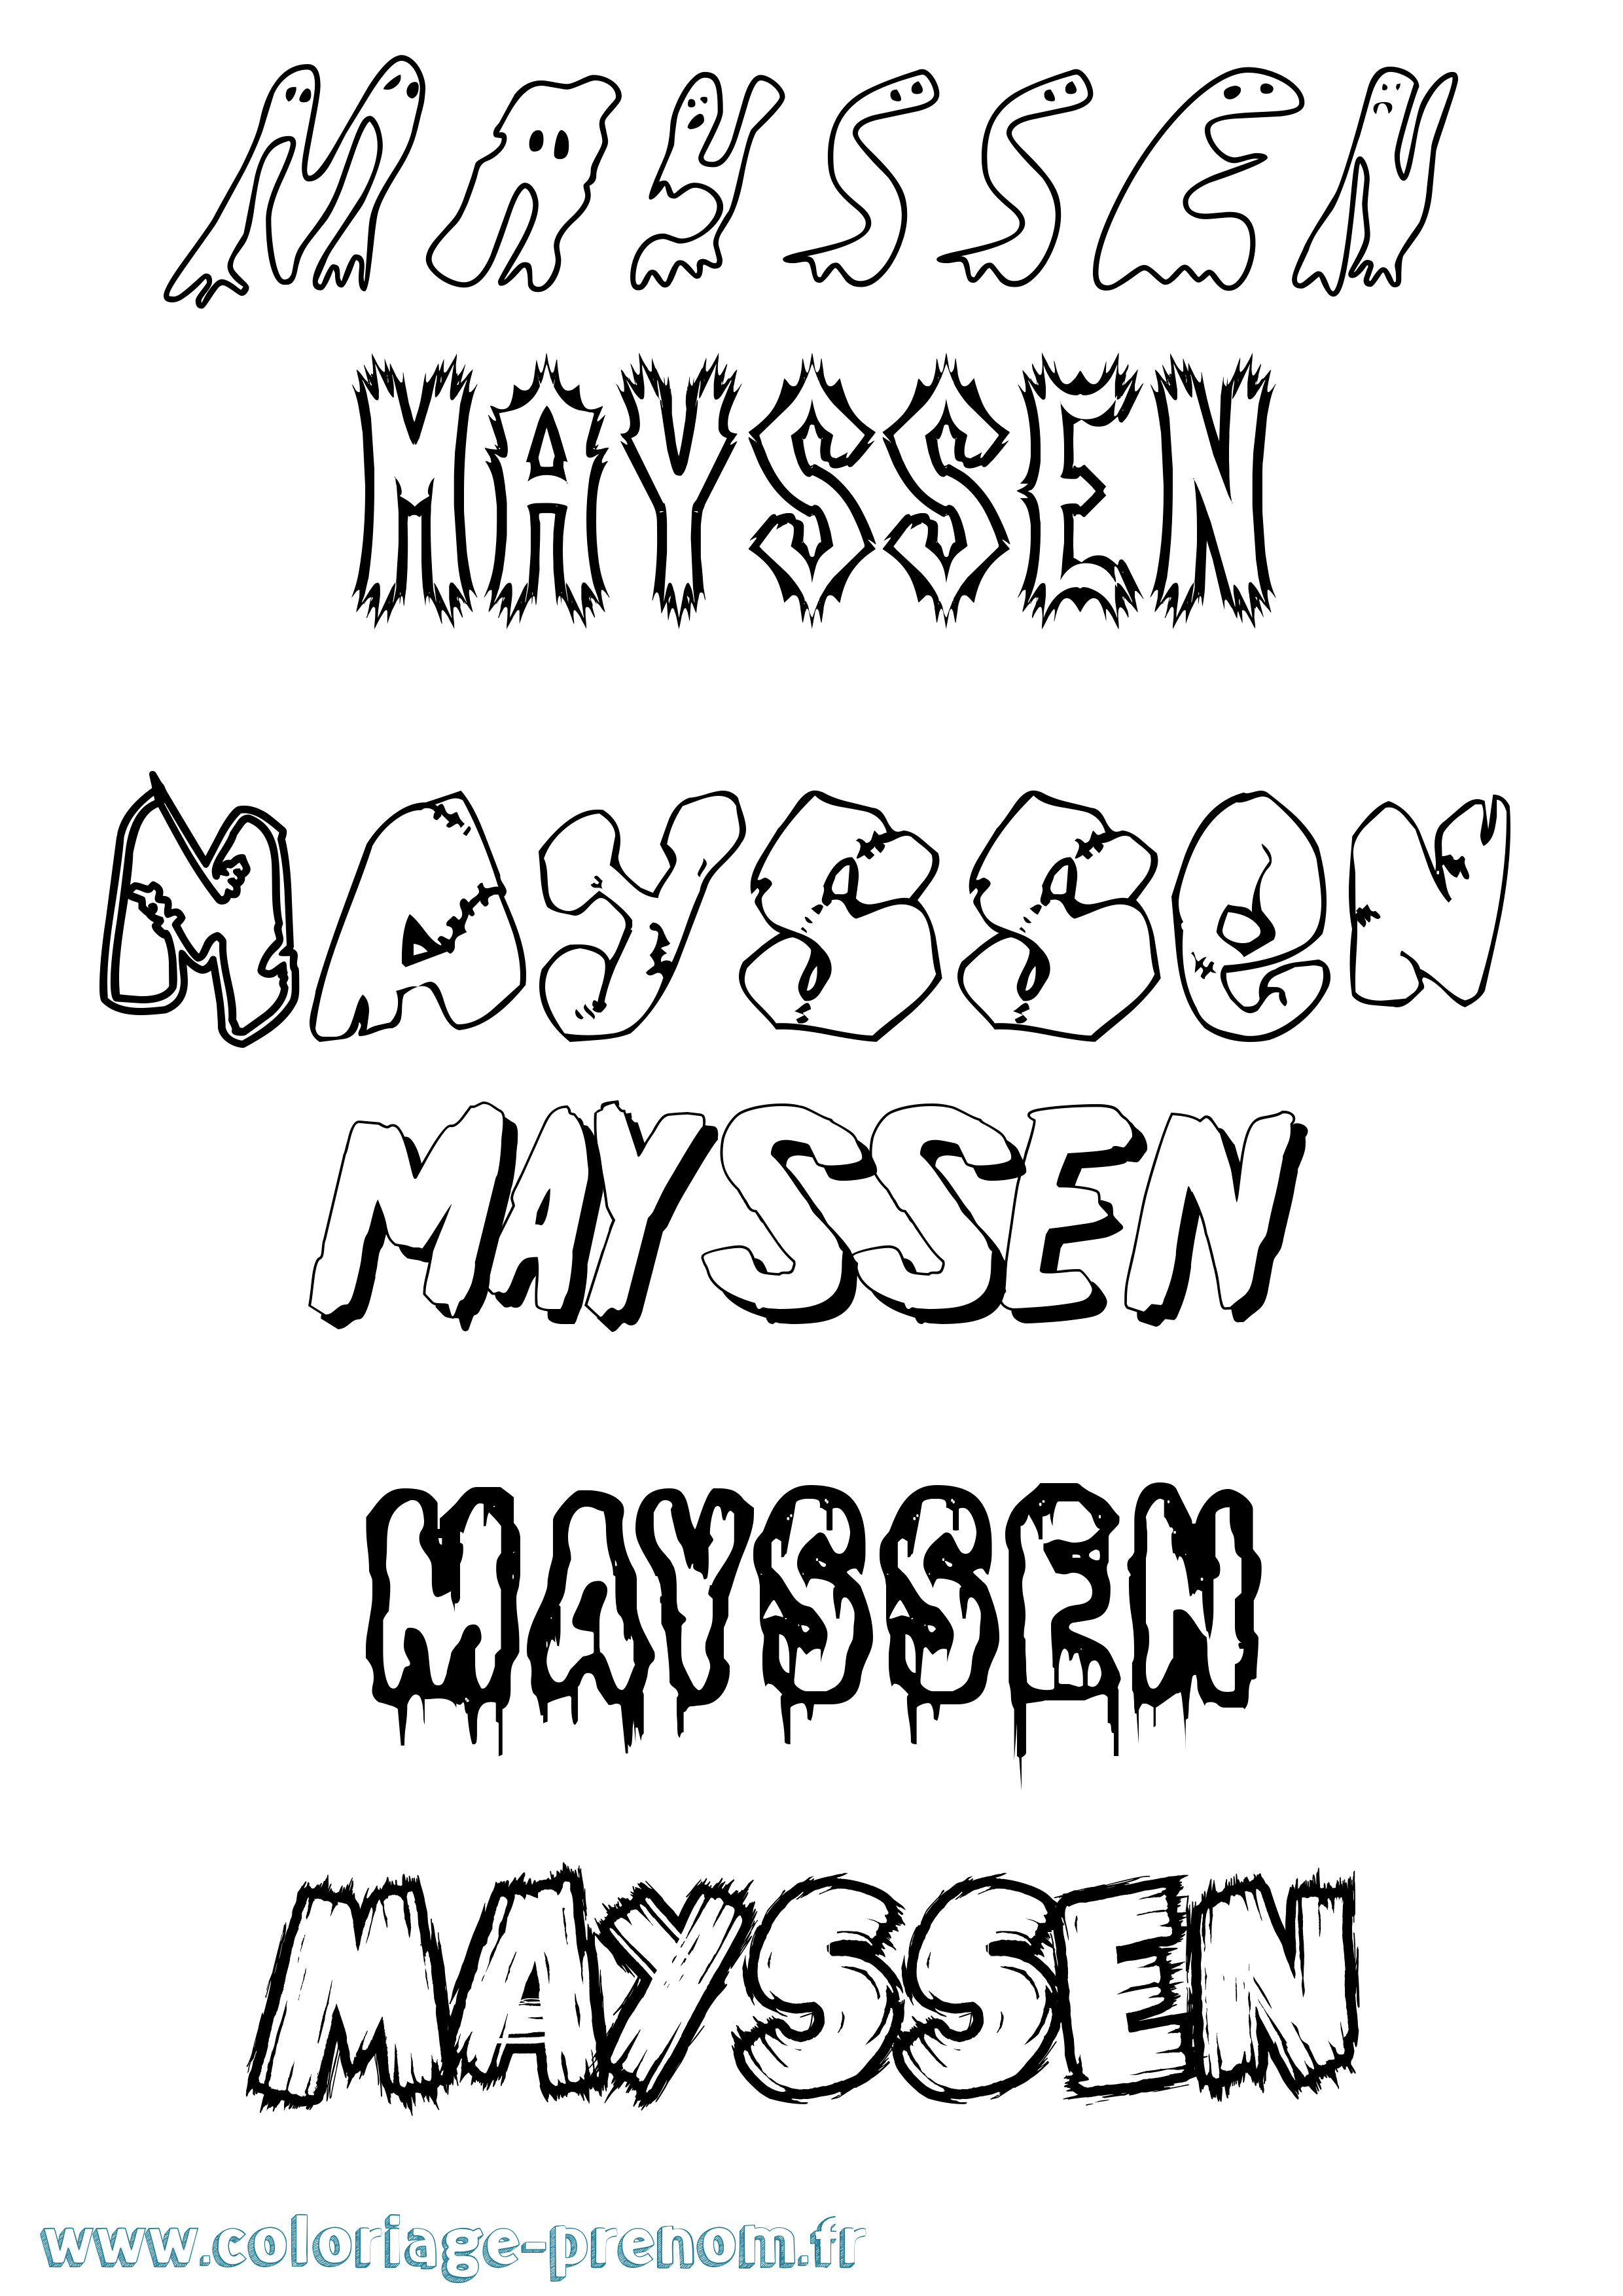 Coloriage prénom Mayssen Frisson